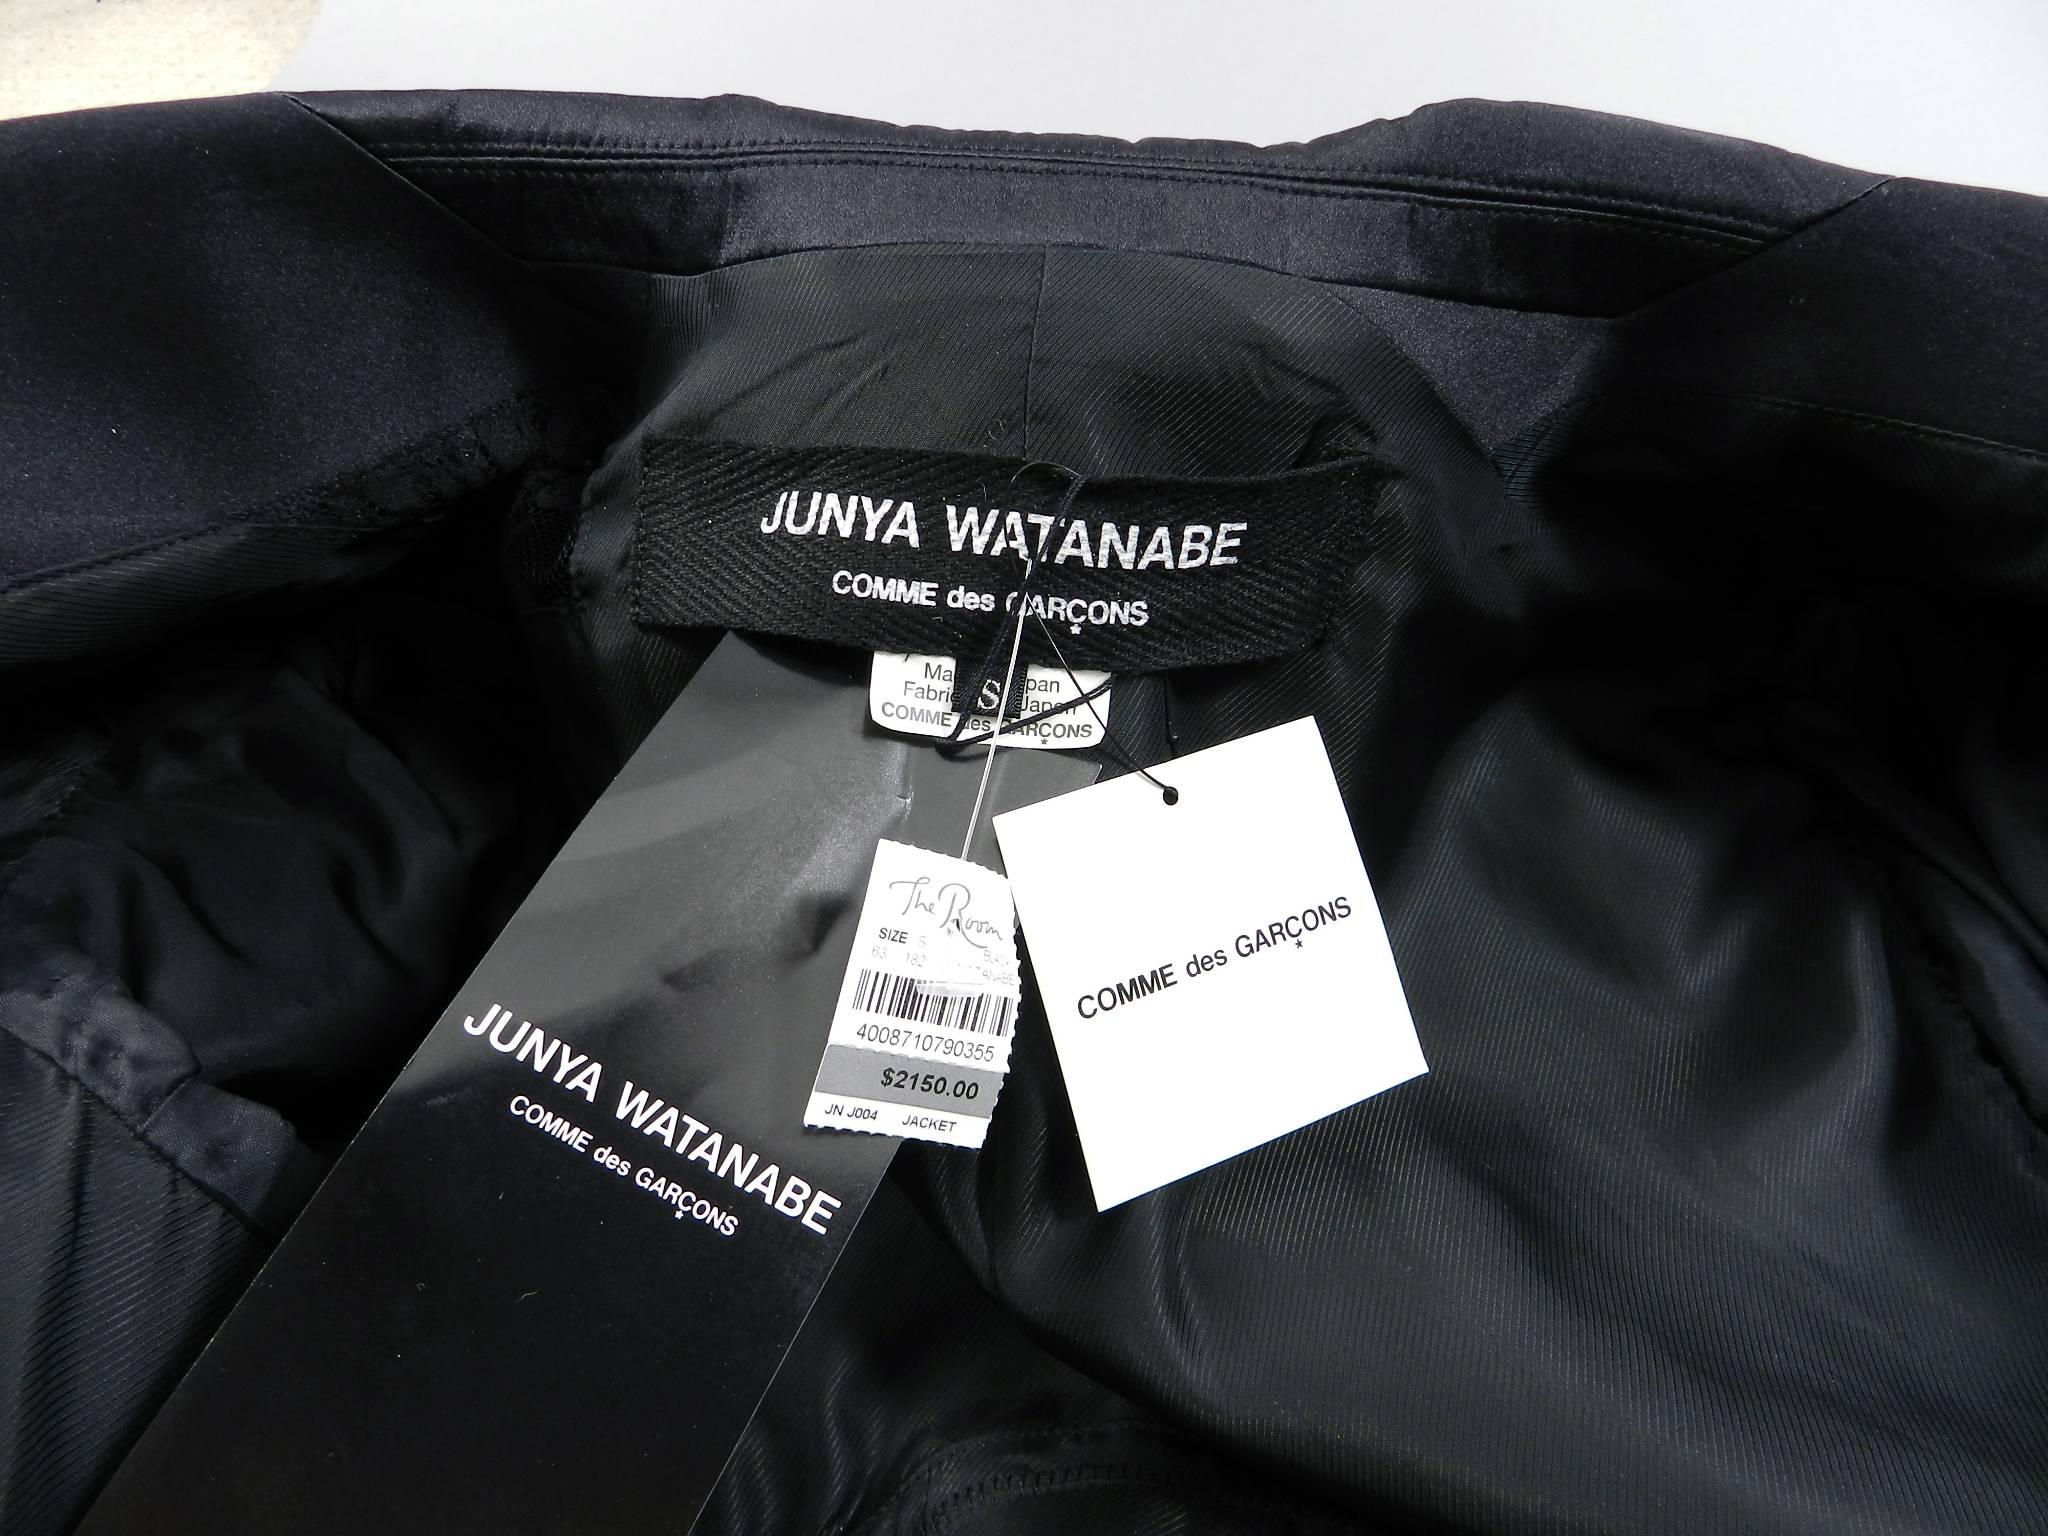 Junya Watanabe Comme Des Garcons Fall 2014 Patchwork Jacket 2